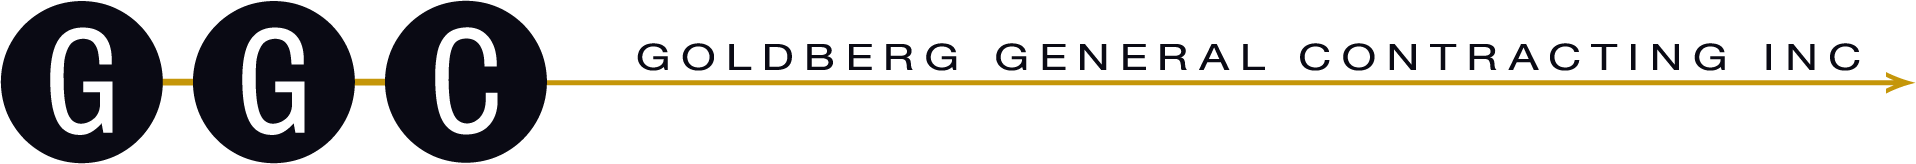 Goldberg General Contracting Inc